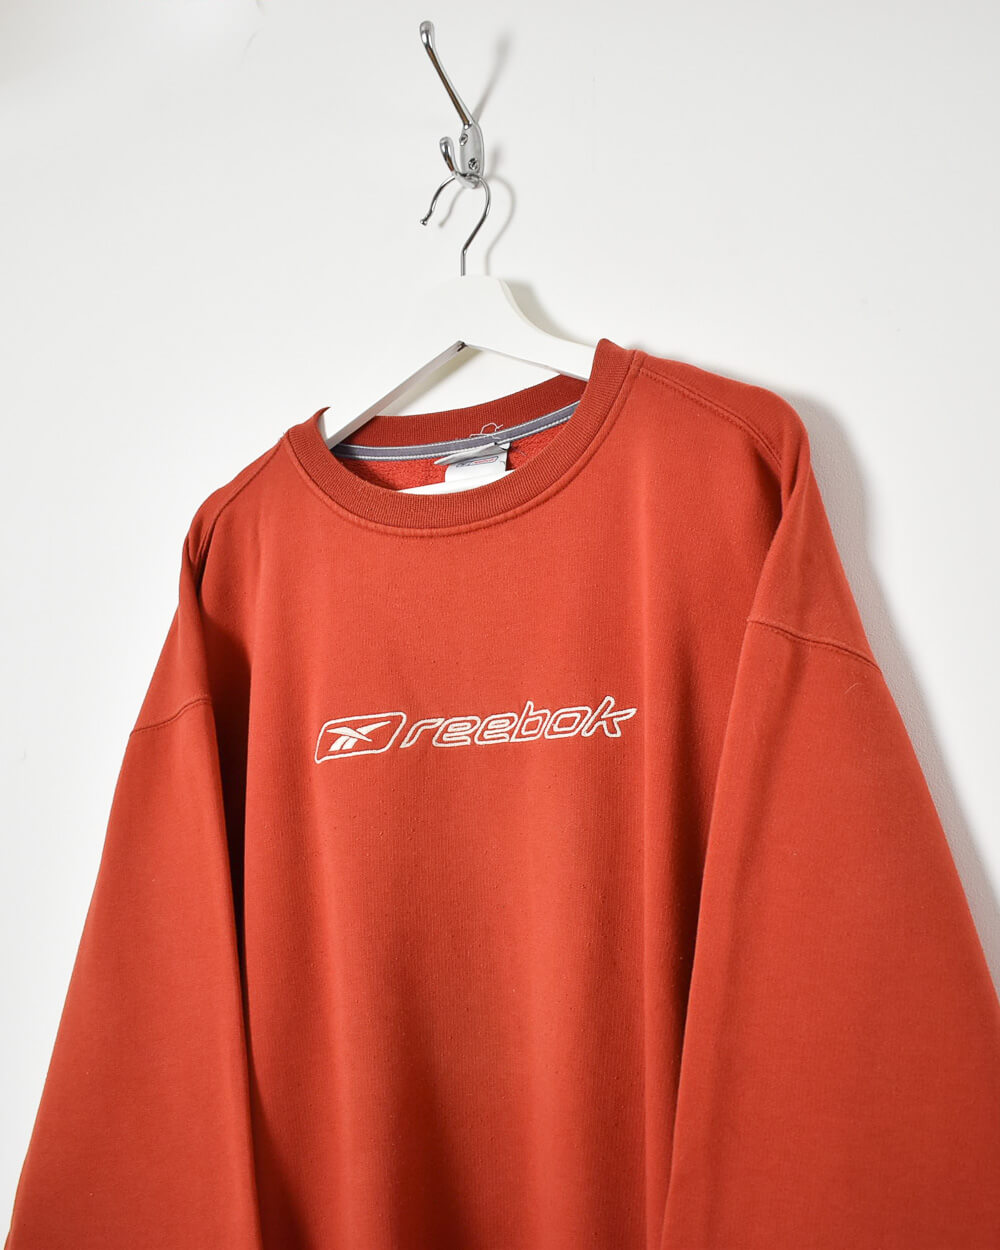 Reebok Sweatshirt - XX-Large - Domno Vintage 90s, 80s, 00s Retro and Vintage Clothing 